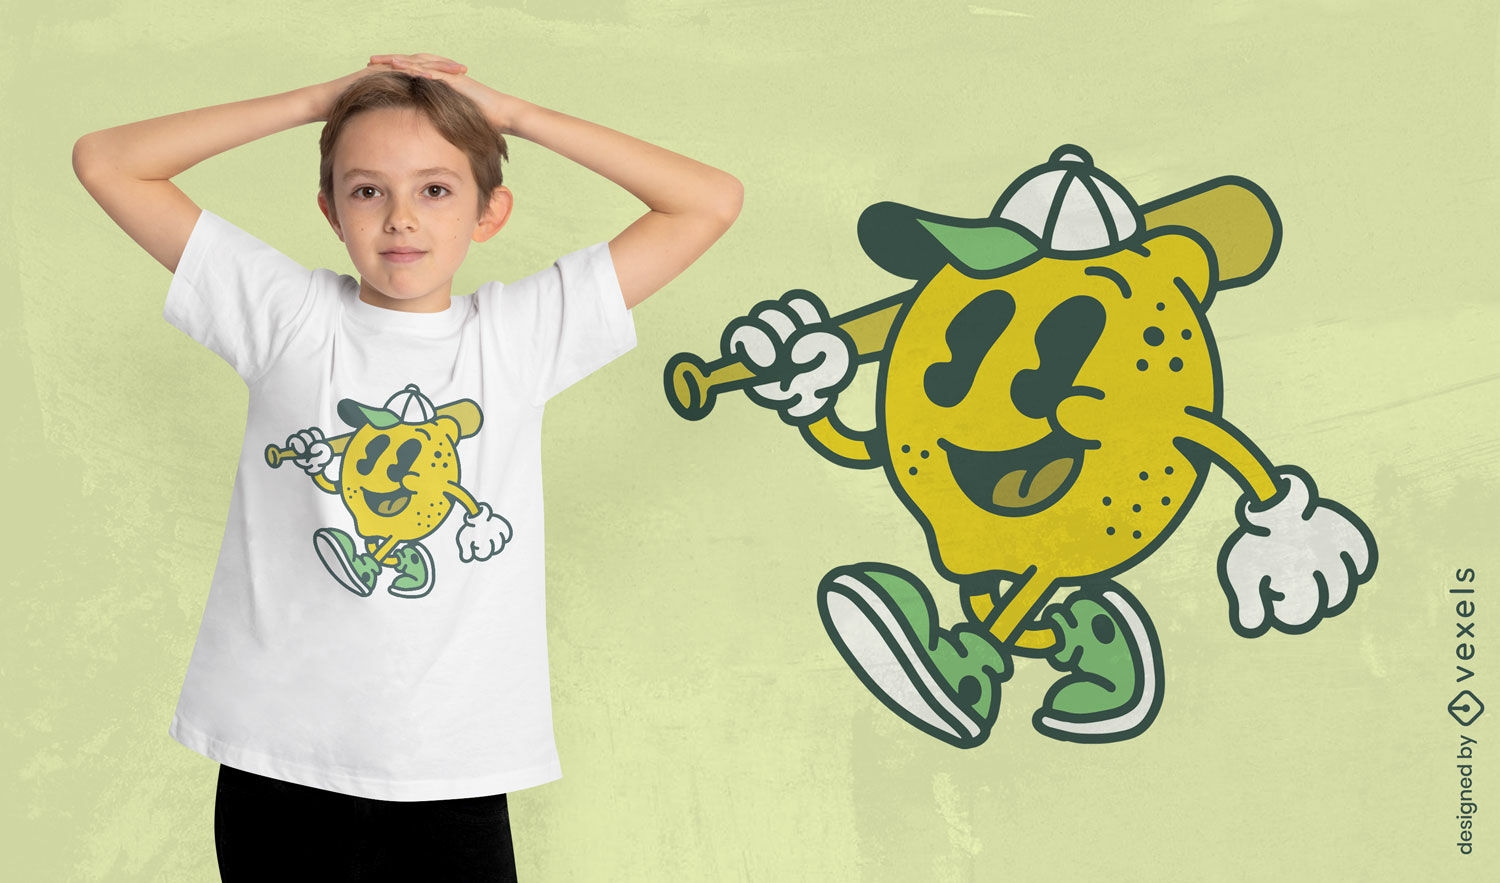 Zitronen-Baseballspieler-T-Shirt-Design